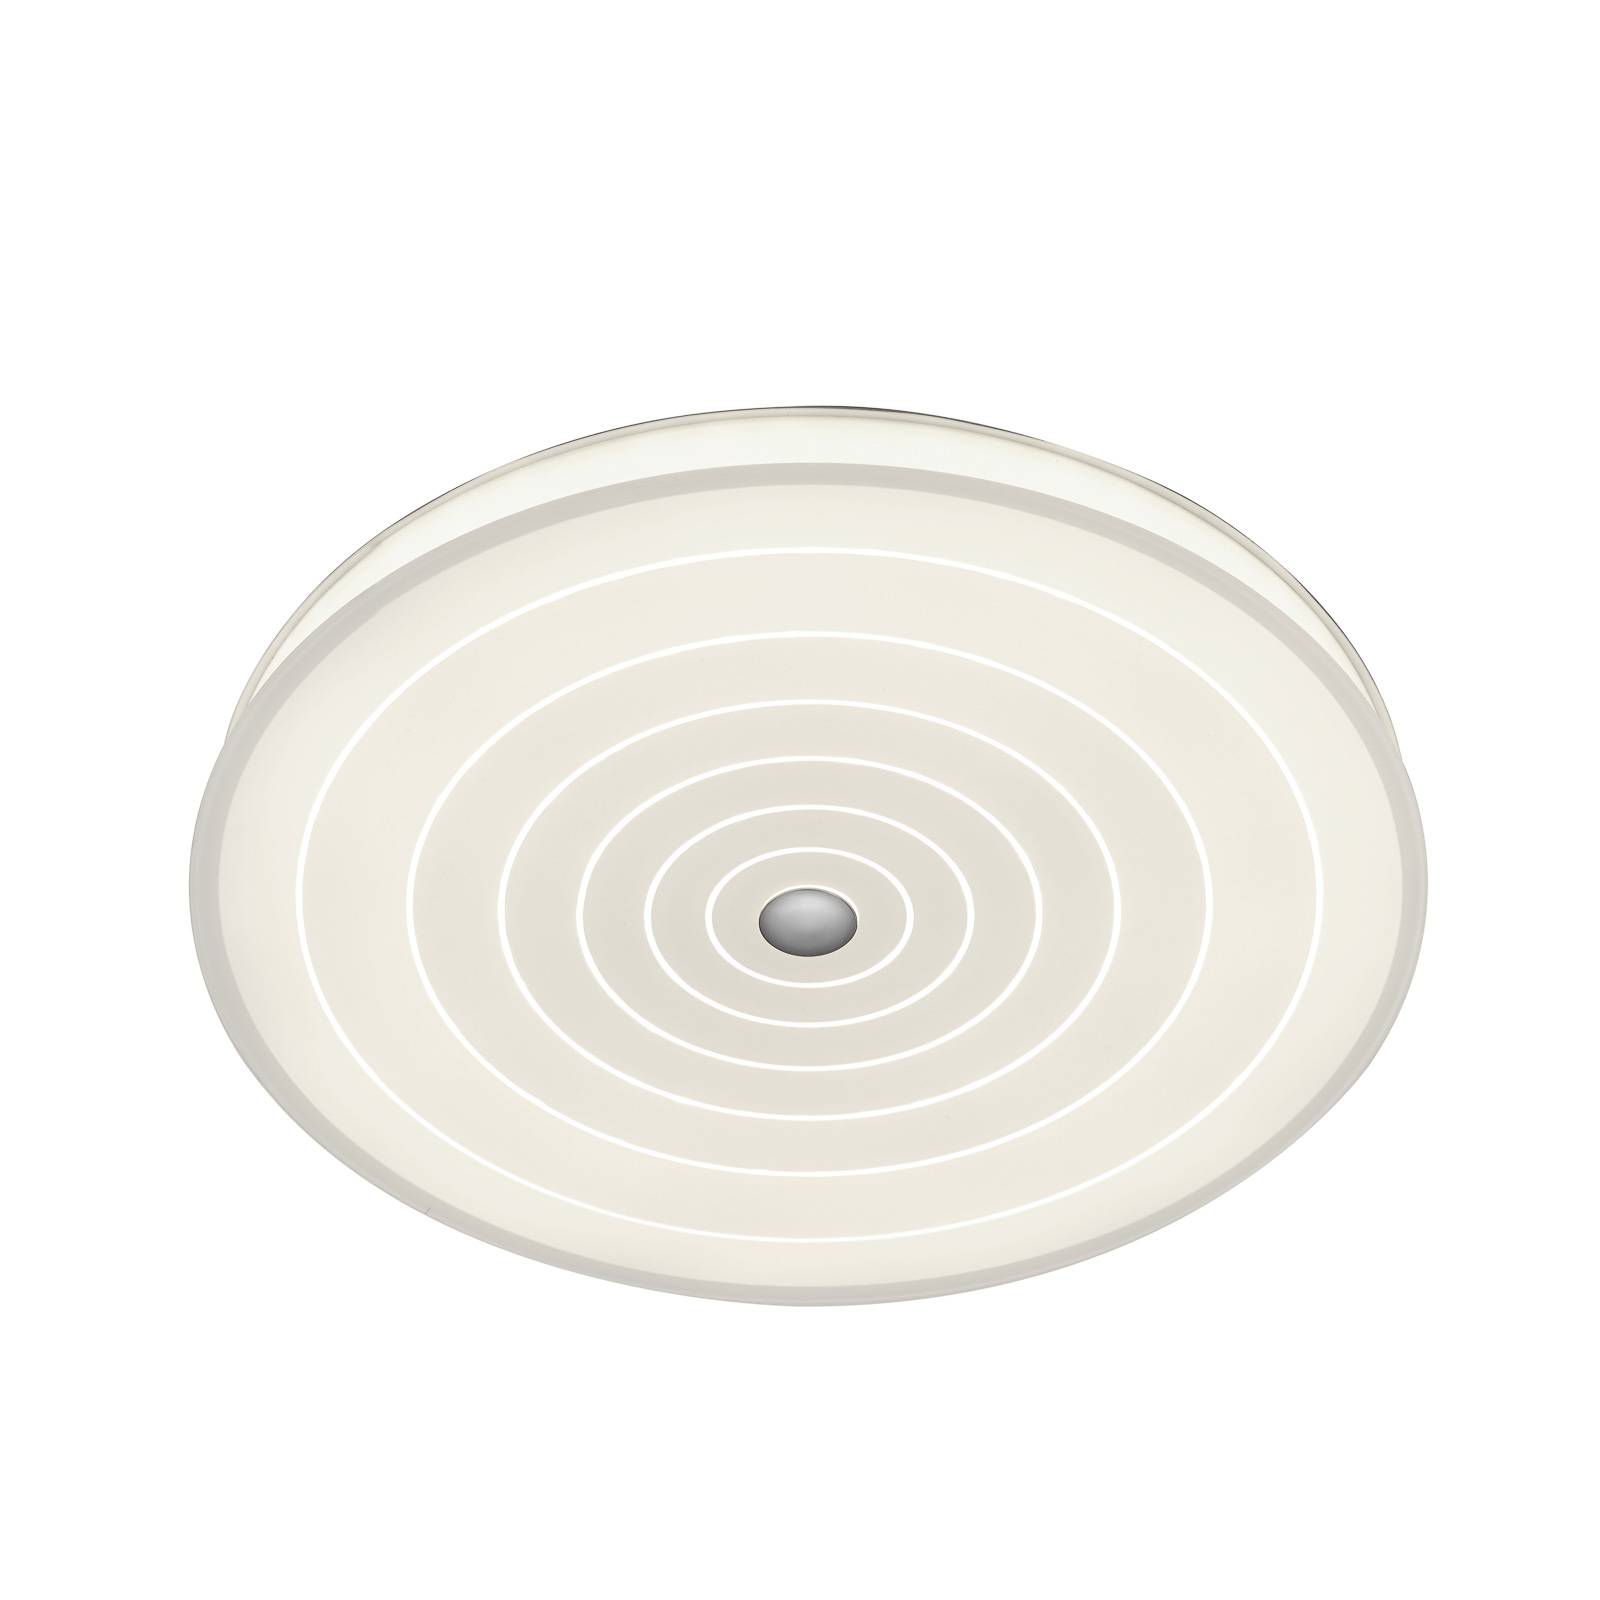 BANKAMP Mandala LED-Deckenleuchte Kreise, Ø 52 cm